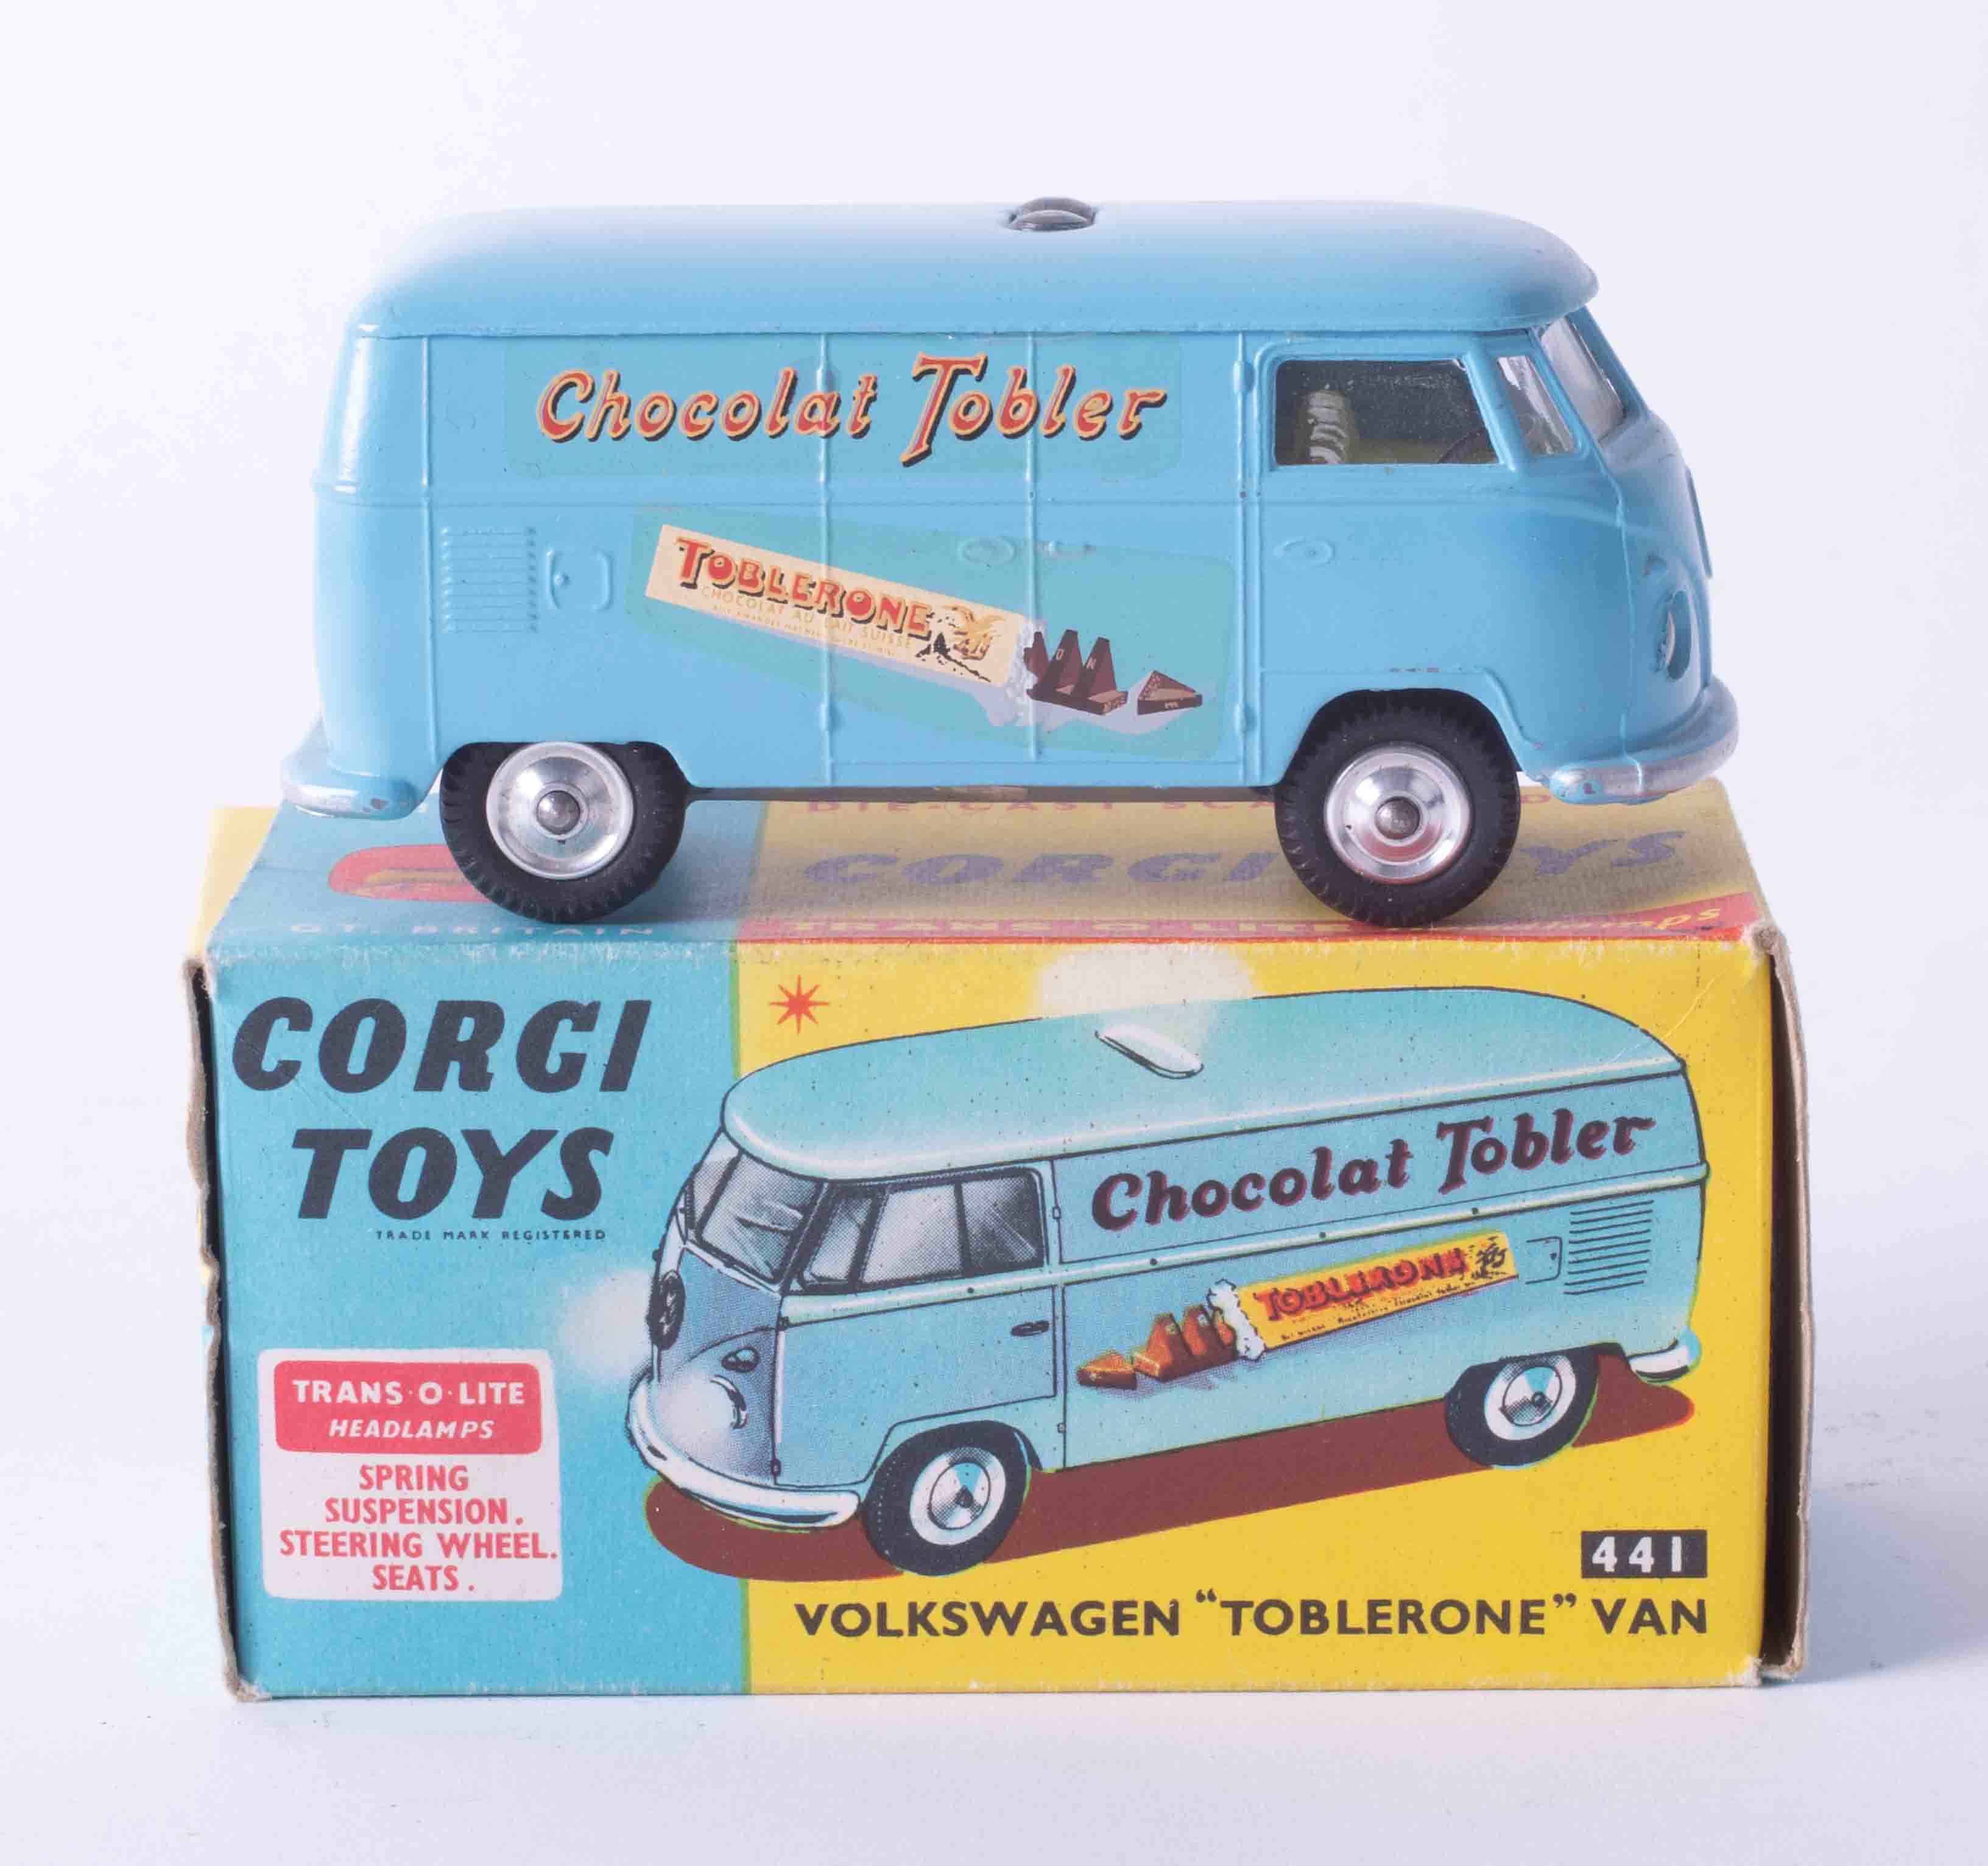 Corgi Toys 441 Volkswagen Toblerone van, boxed.